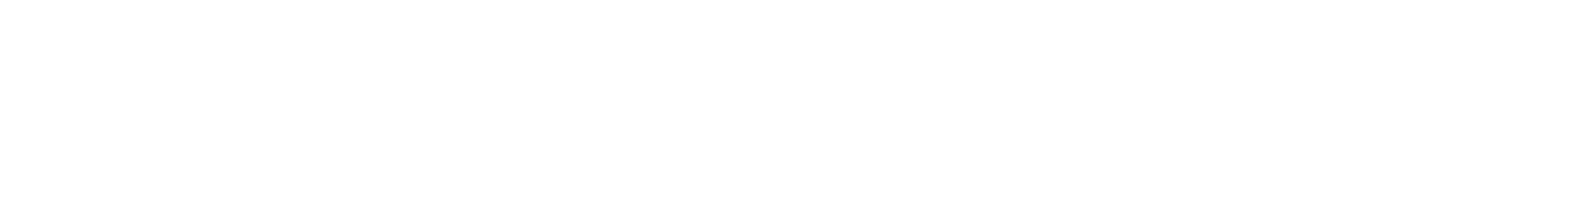 Washington Trust Bancorp logo large for dark backgrounds (transparent PNG)